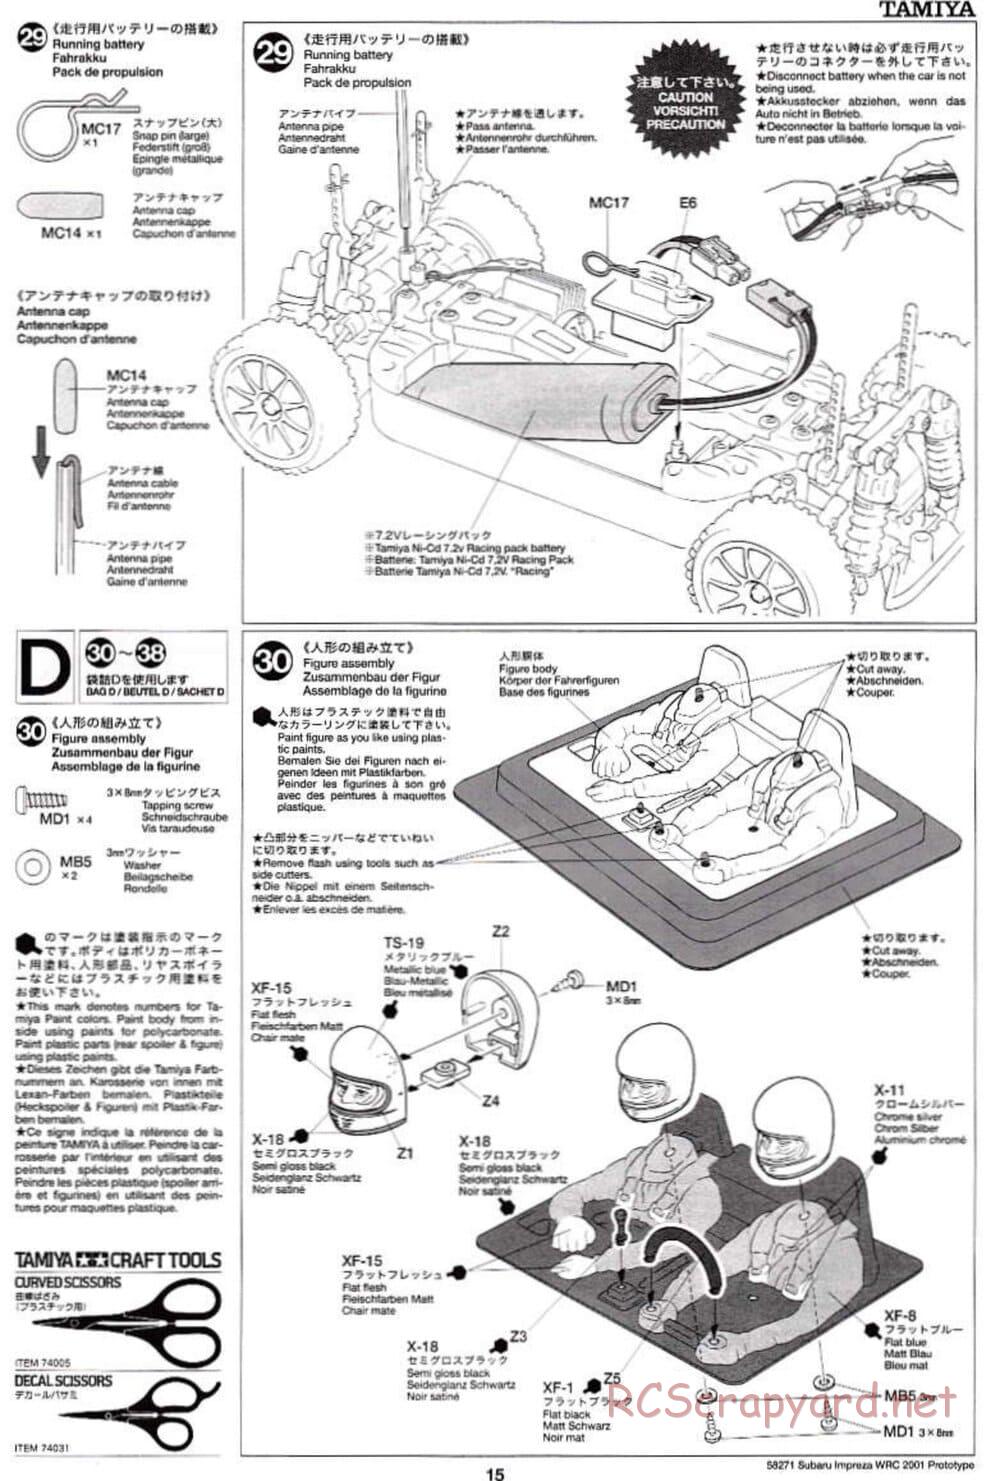 Tamiya - Subaru Impreza WRC 2001 Prototype - TB-01 Chassis - Manual - Page 15